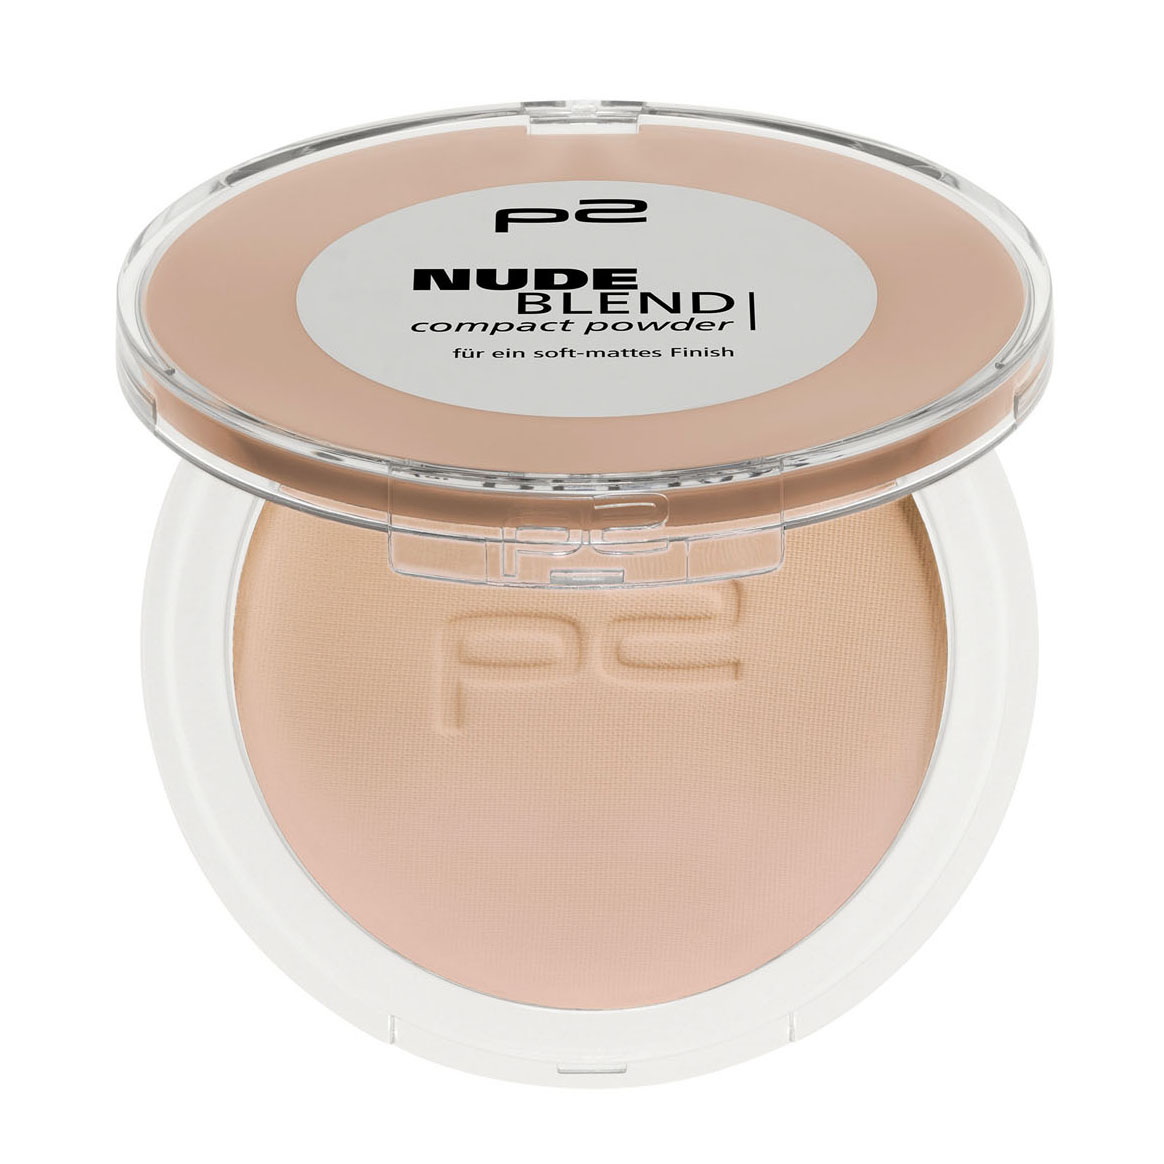 P2 Cosmetics Nude Blend Compact Powder Puder W Kompakcie Cena Opinie Recenzja Kwc